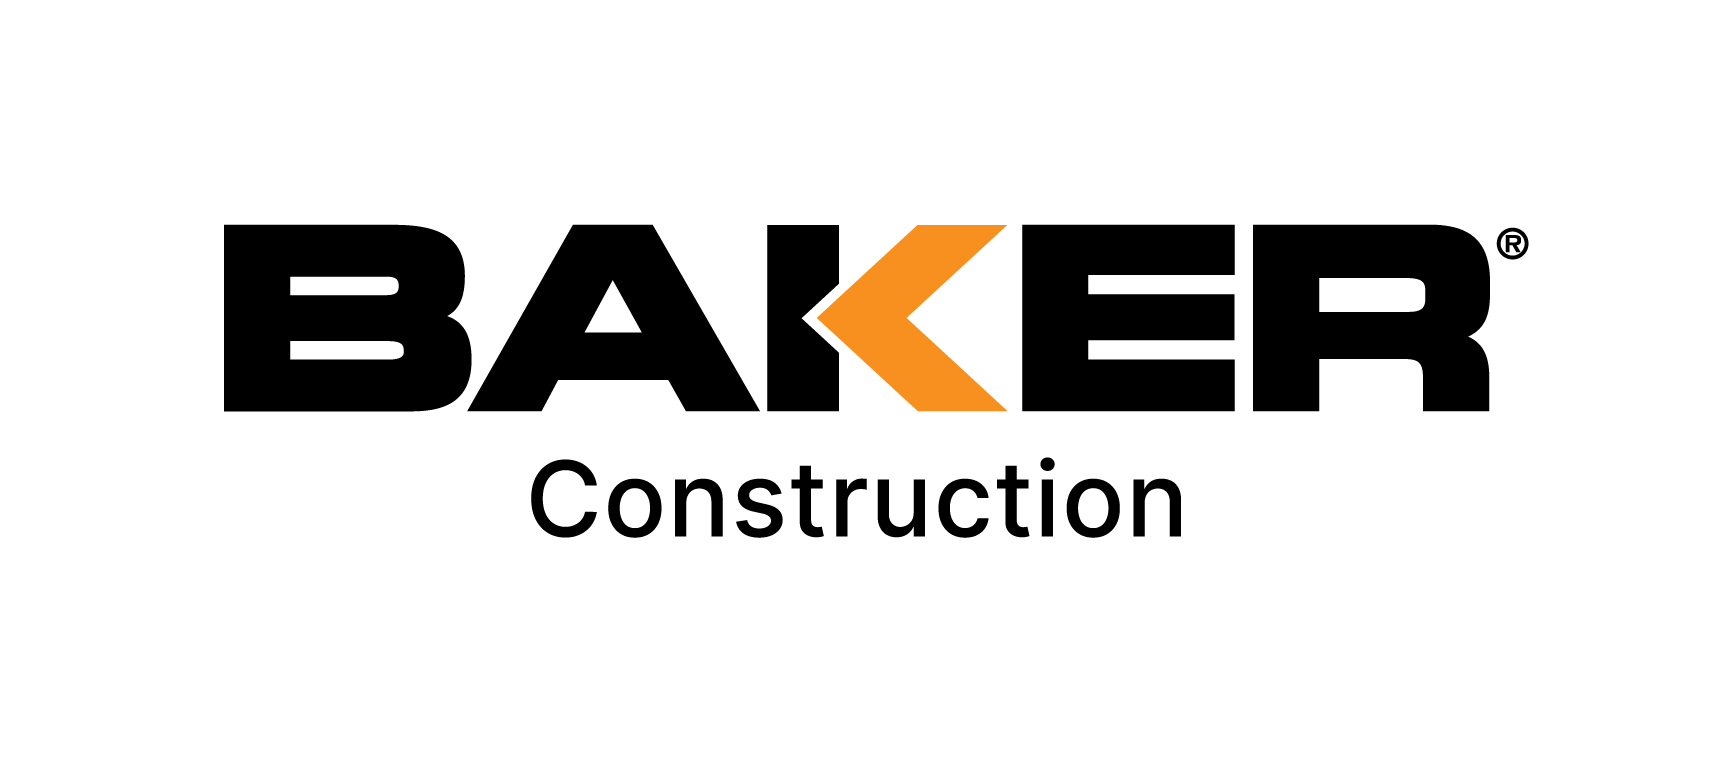 Baker Construction